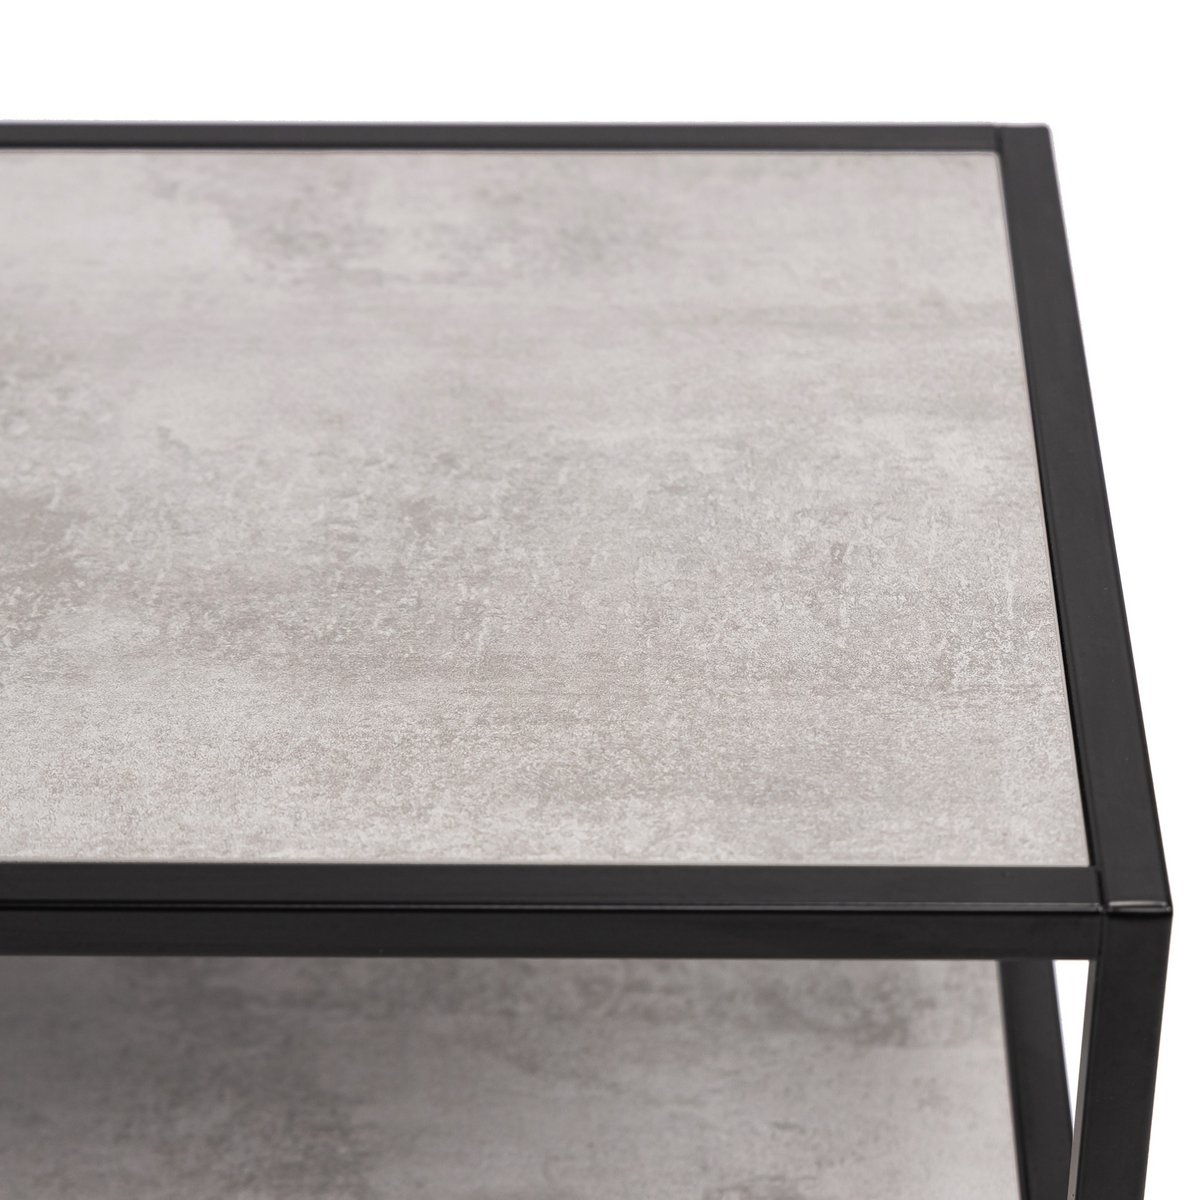 KantoormeubelenPlus Stalux Tv-meubel 'Luuk' 200cm, kleur zwart / beton